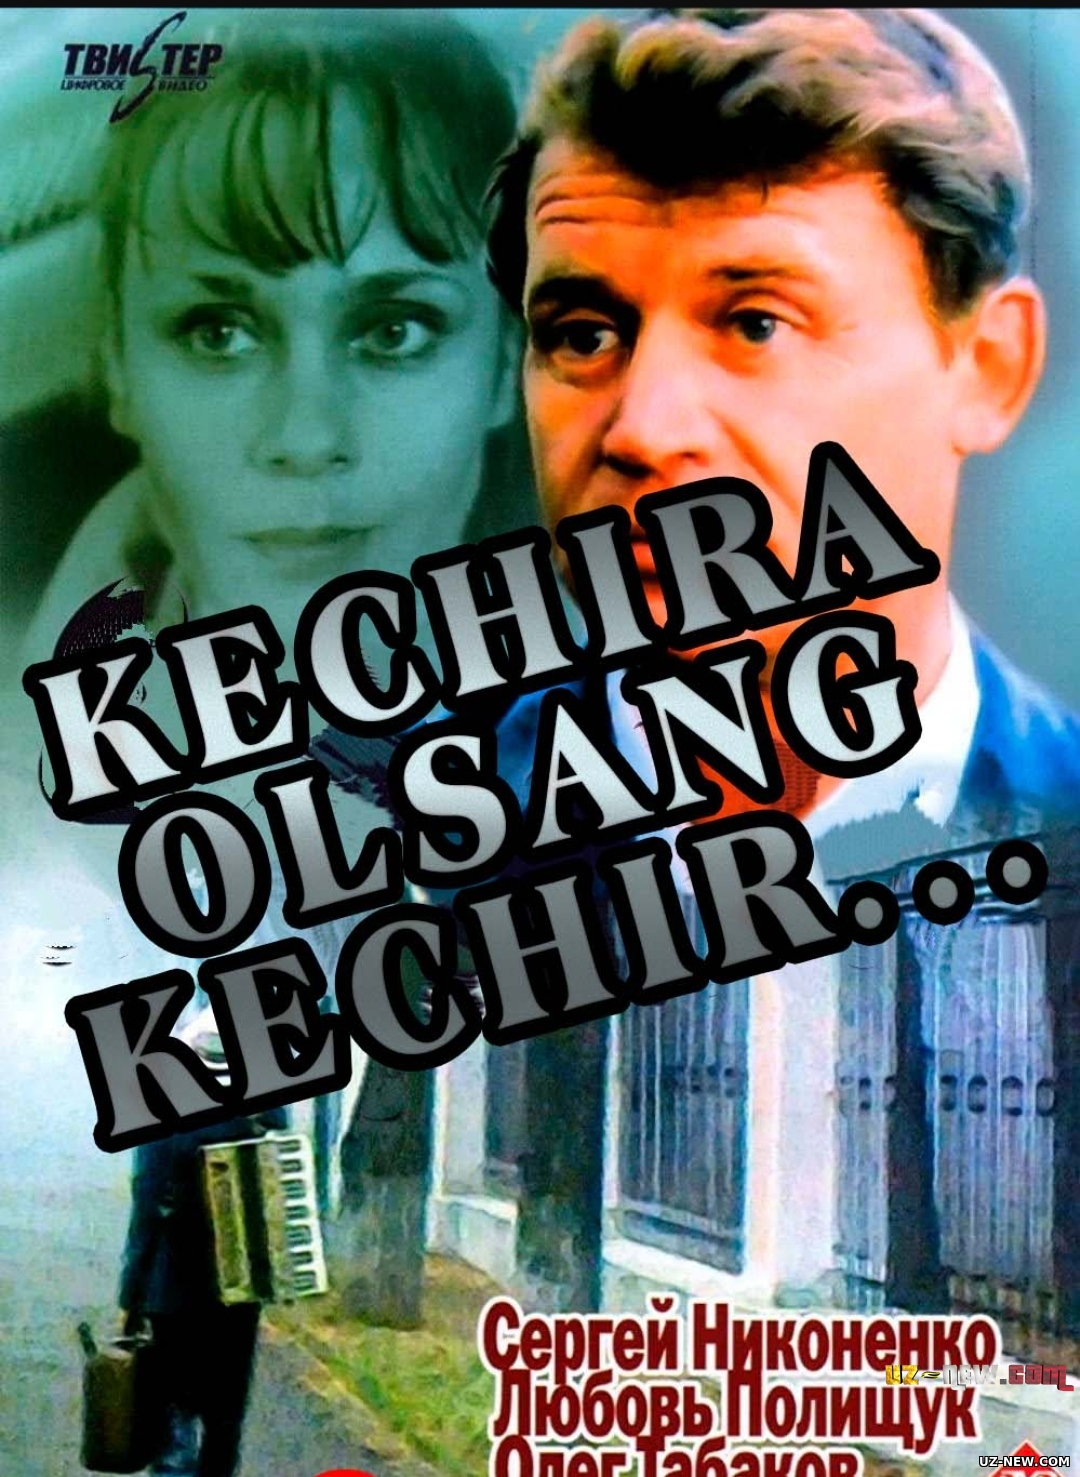 Kechira olsang kechir (Uzbek tilida O'zbekcha) 1984